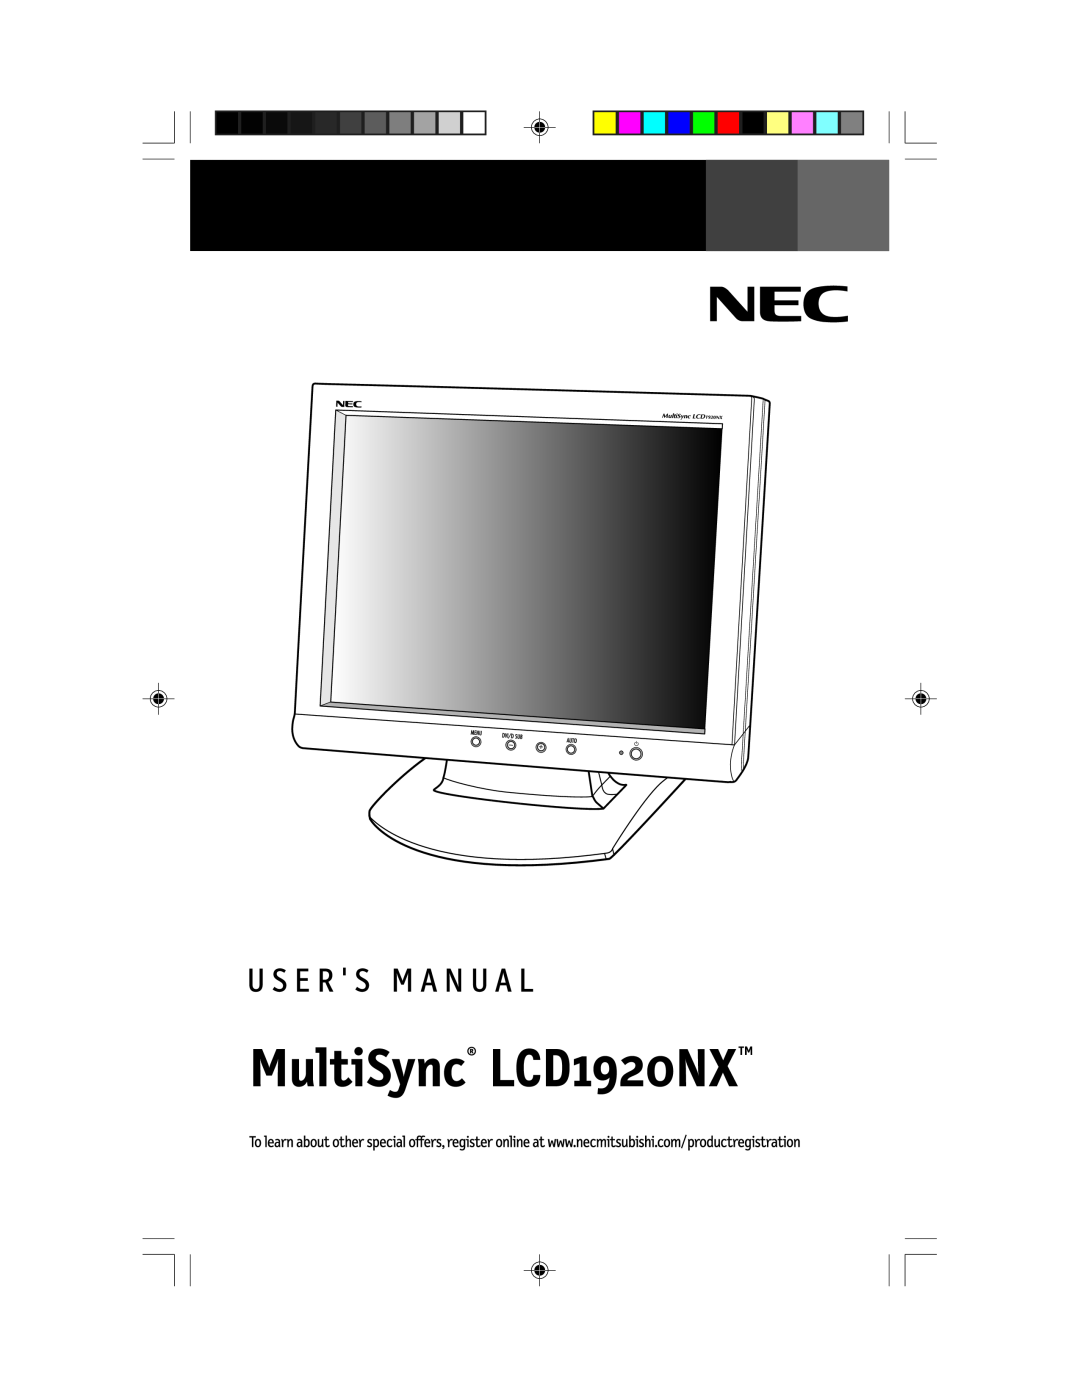 NEC manual MultiSync LCD1920NXTM 